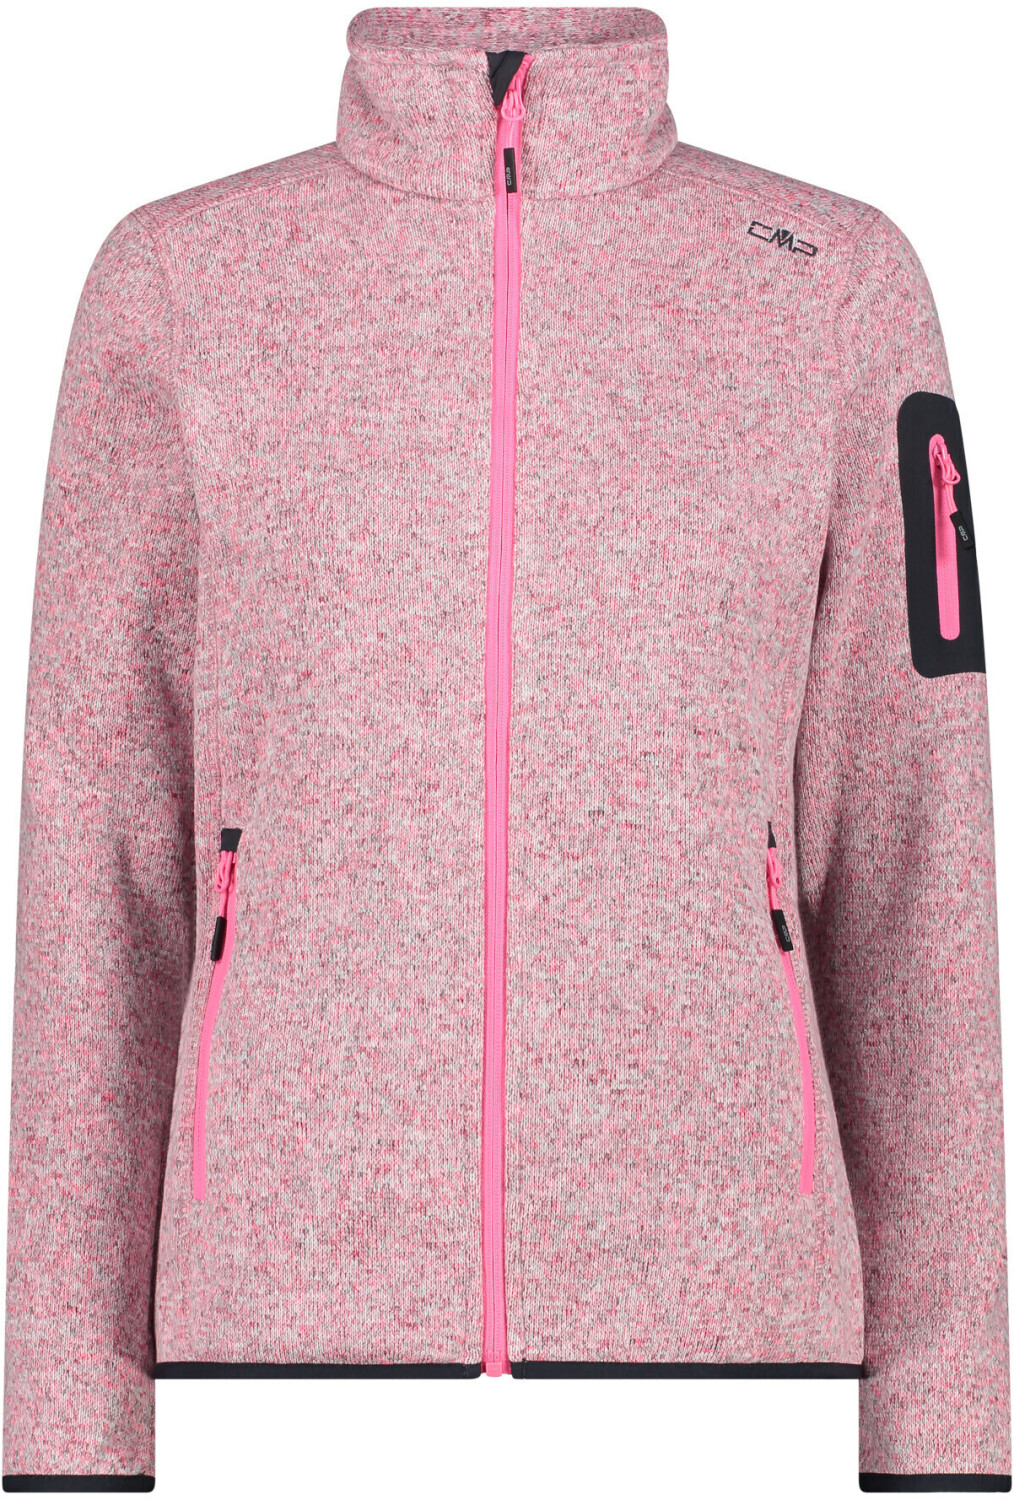 Knit-Tech Fleece (Today) Buy £34.99 CMP Best Jacket from Deals fluo-bianco pink (3H14746) – on Melange